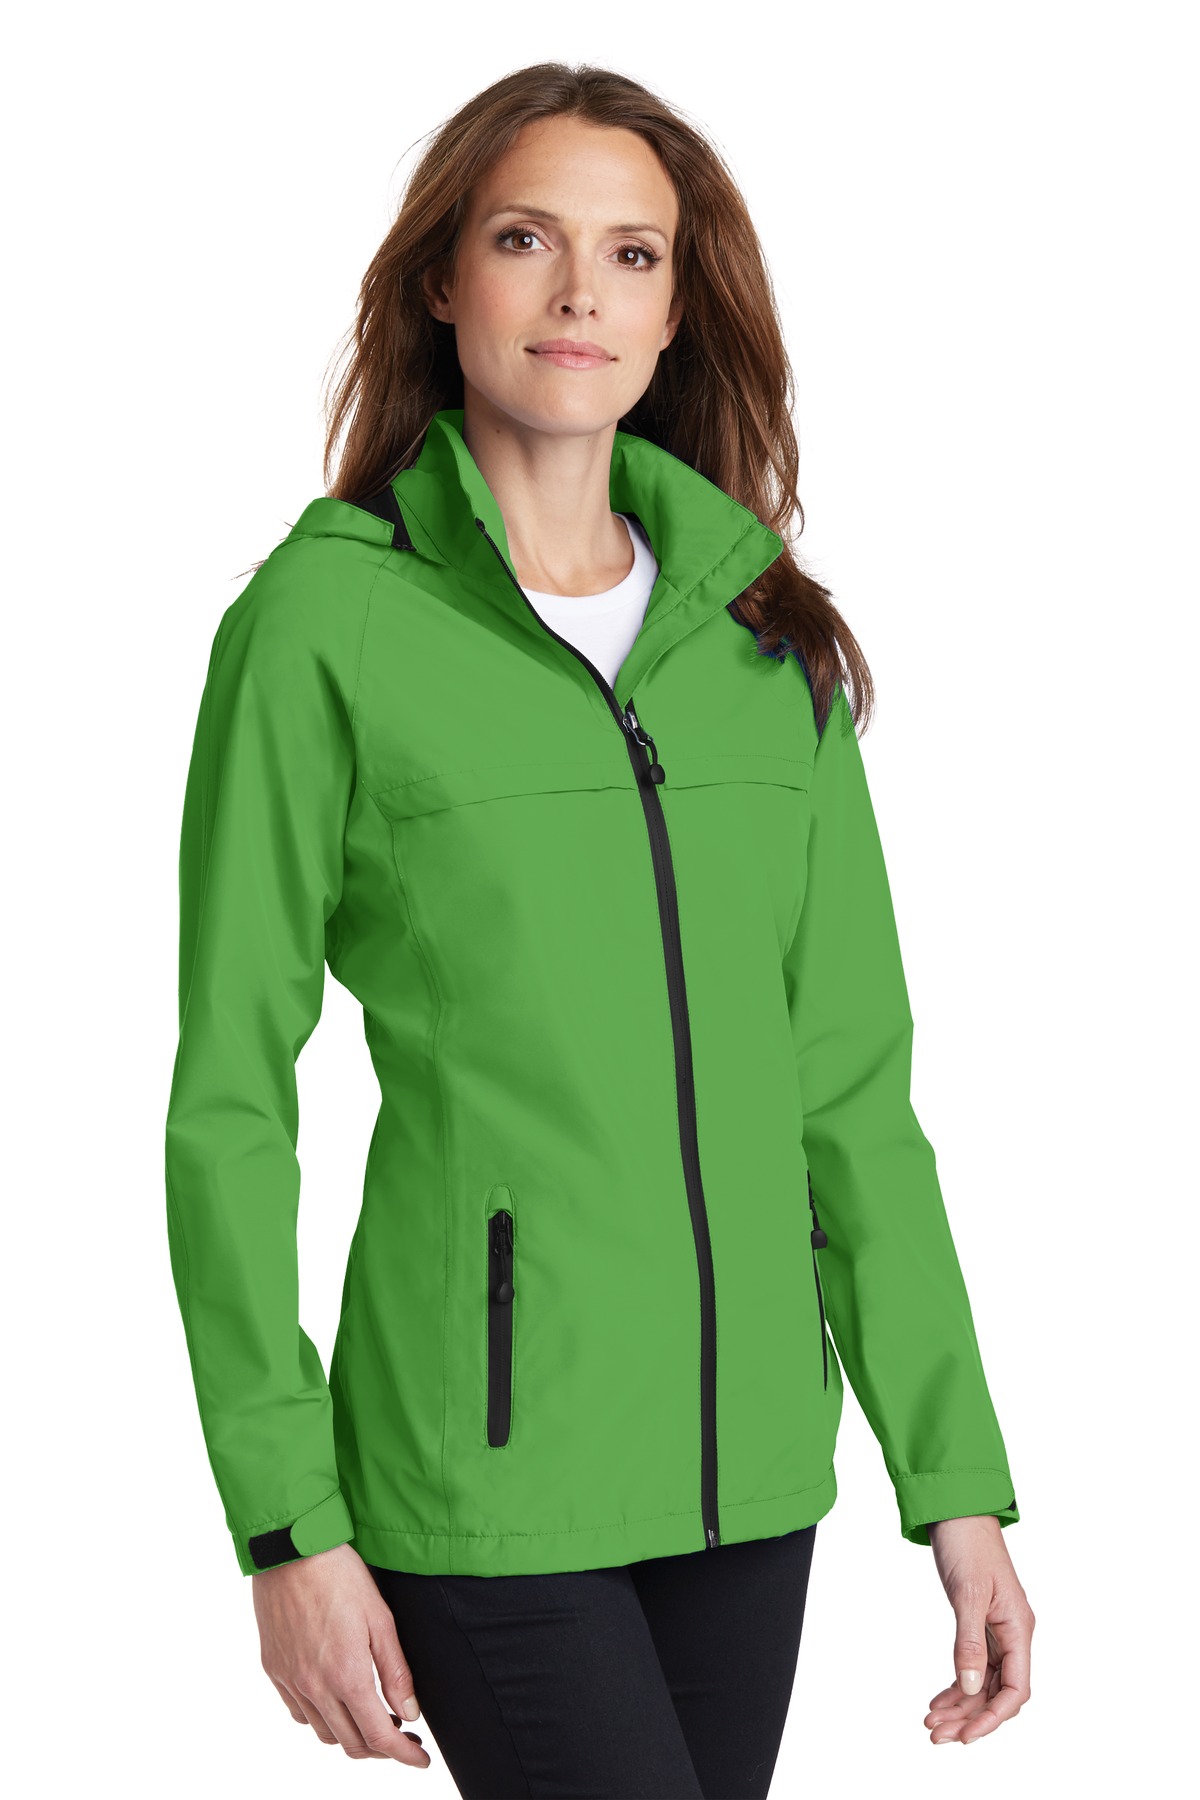 Port Authority Ladies Torrent Waterproof Jacket-L (Vine Green) - image 4 of 6